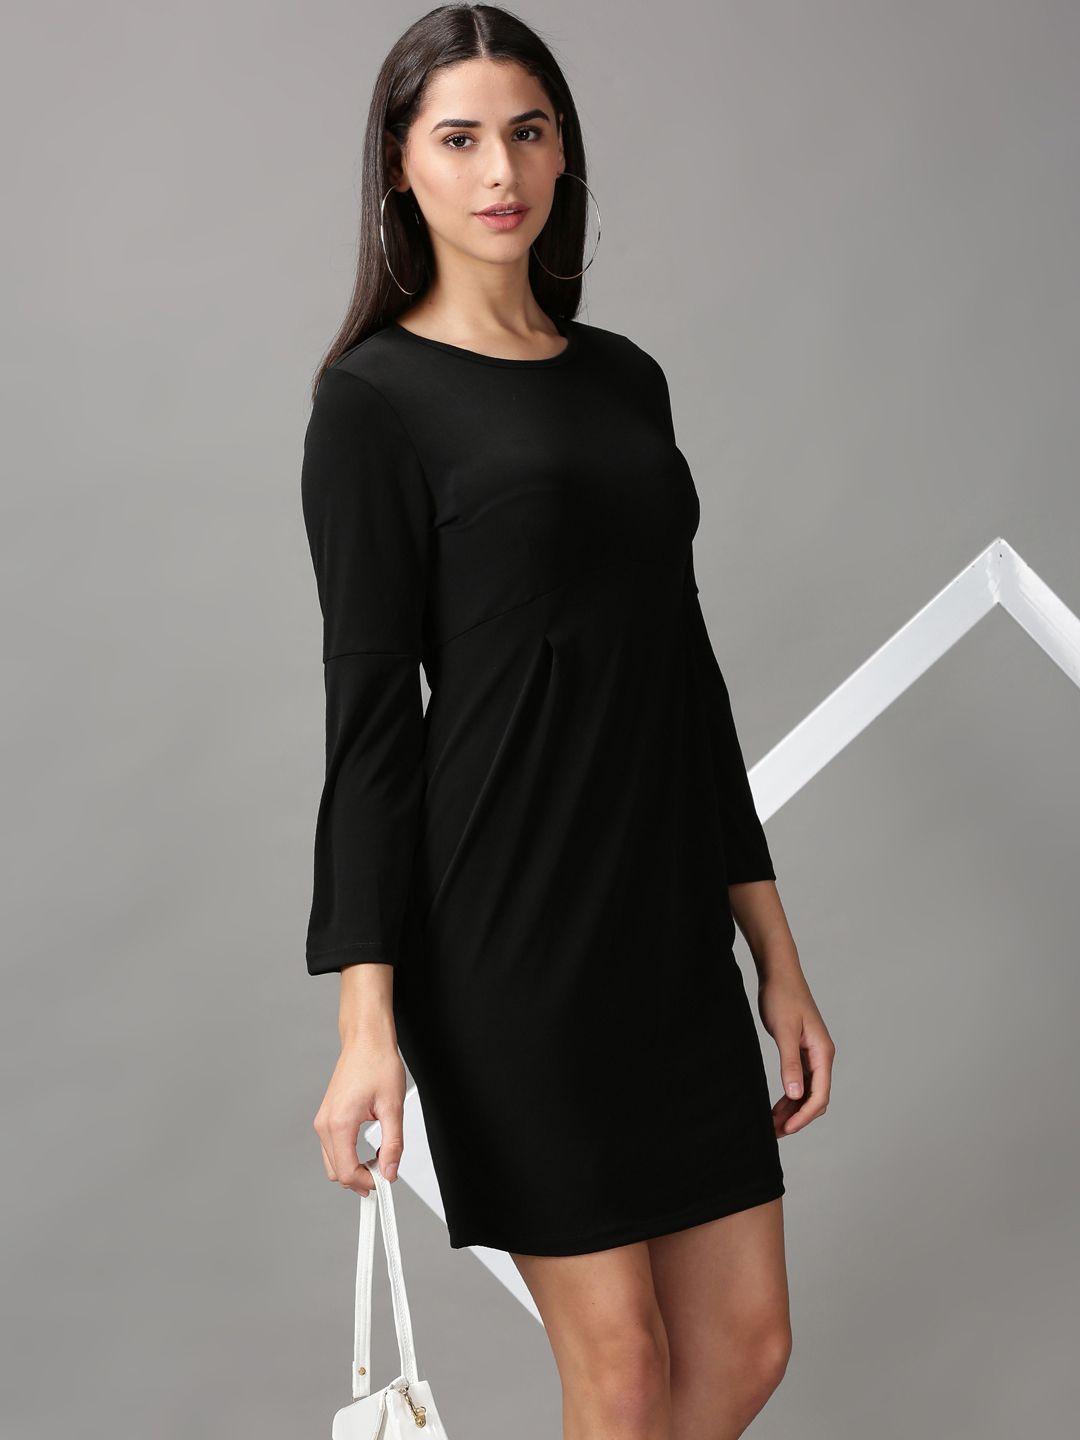 showoff-black-solid-sheath-dress